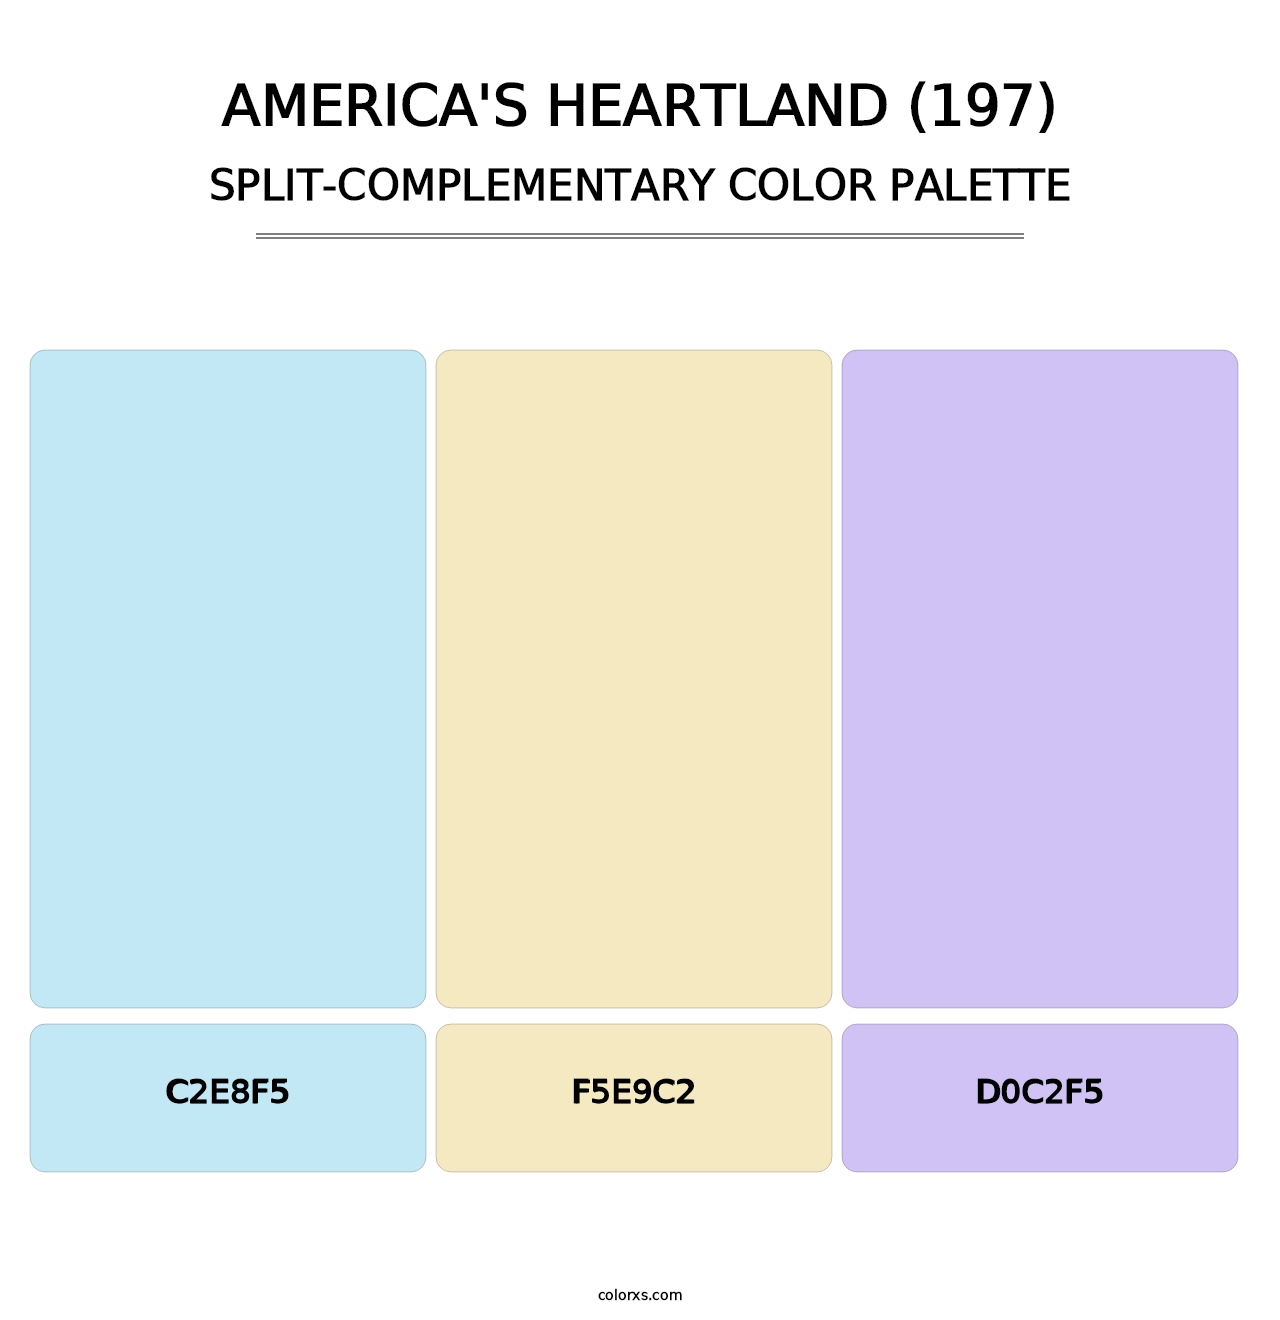 America's Heartland (197) - Split-Complementary Color Palette